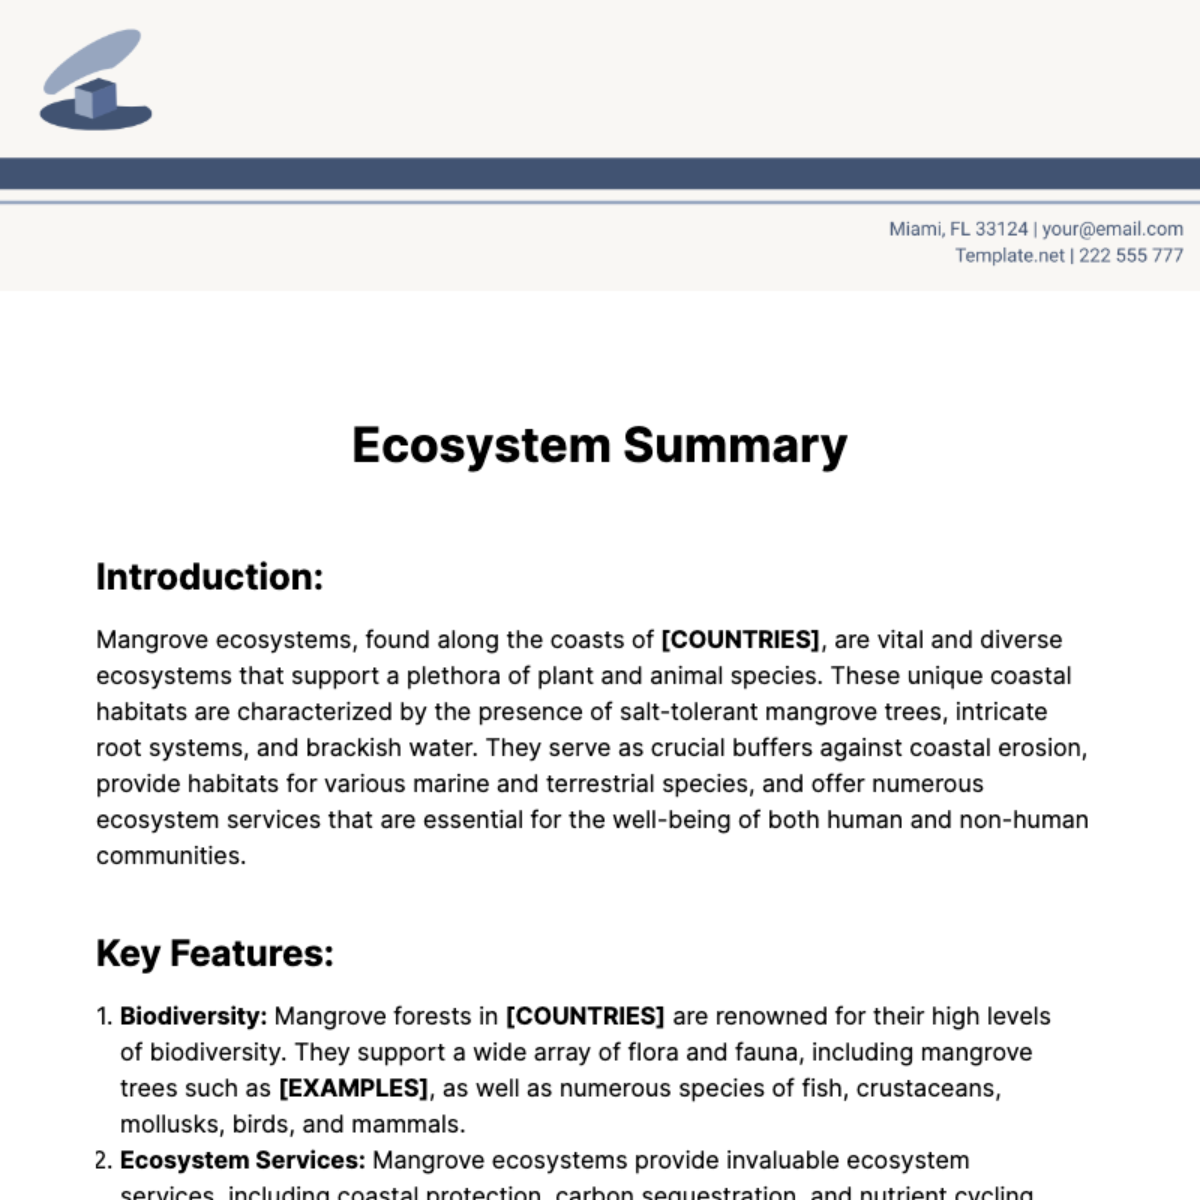 Ecosystem Summary Template